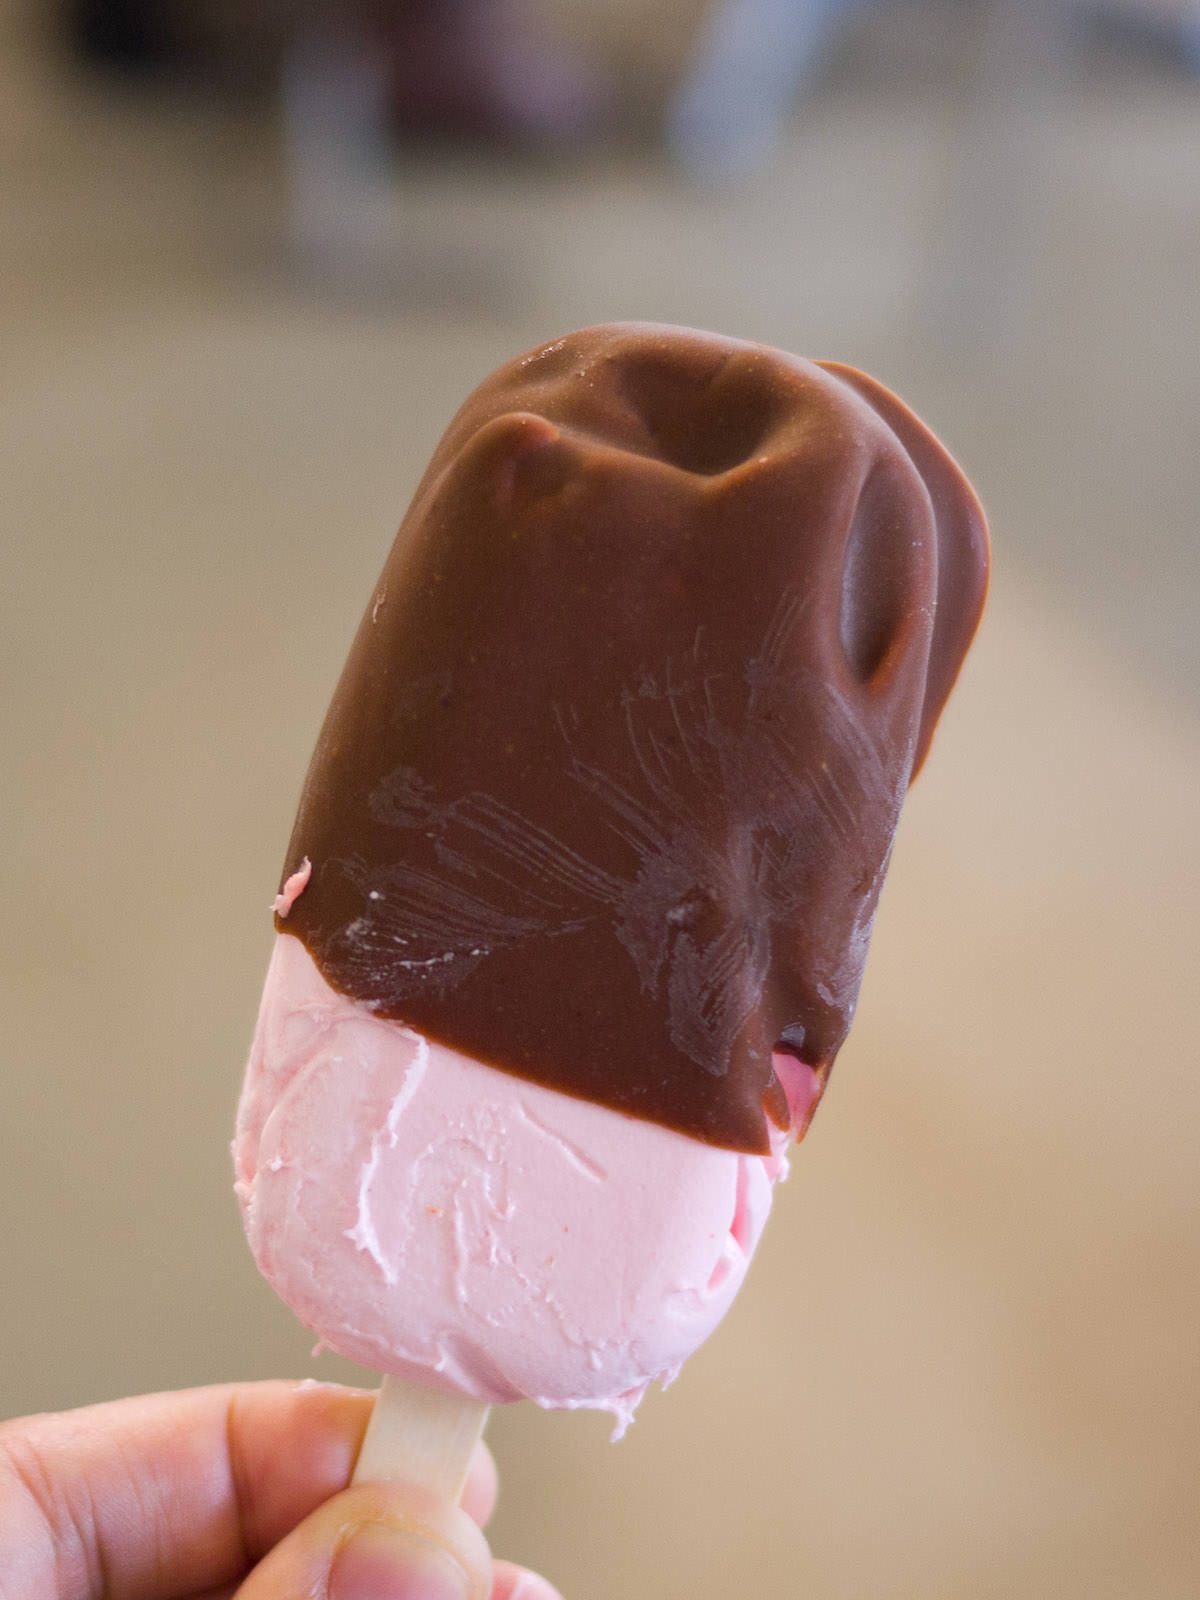 Chocolate-dipped strawberry ice cream